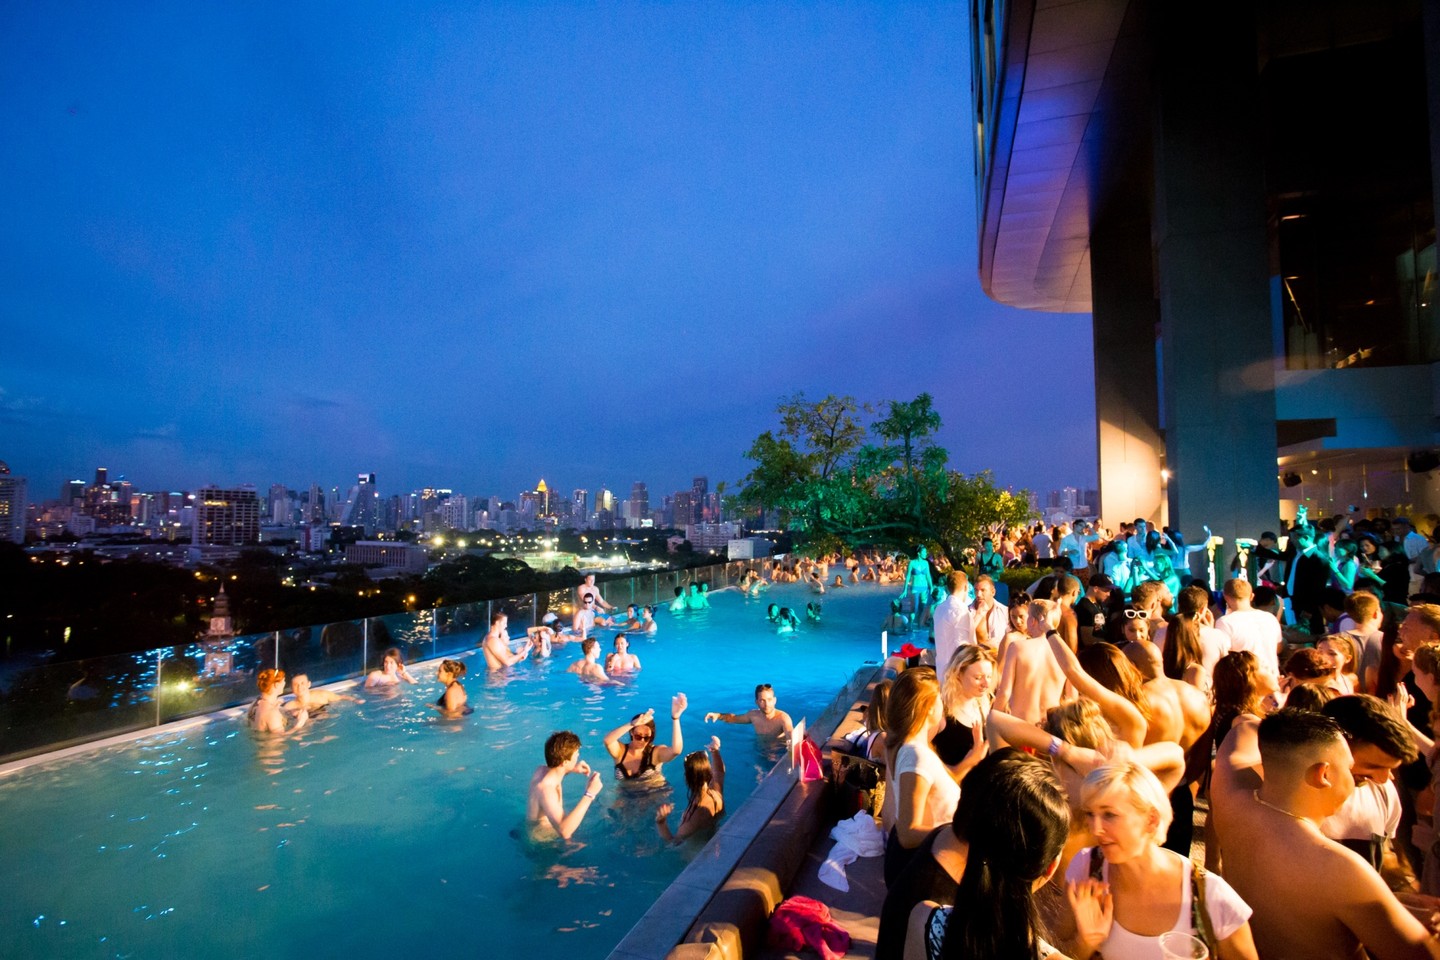 bangkok hotel near bts mrt - SO Bangkok pool party